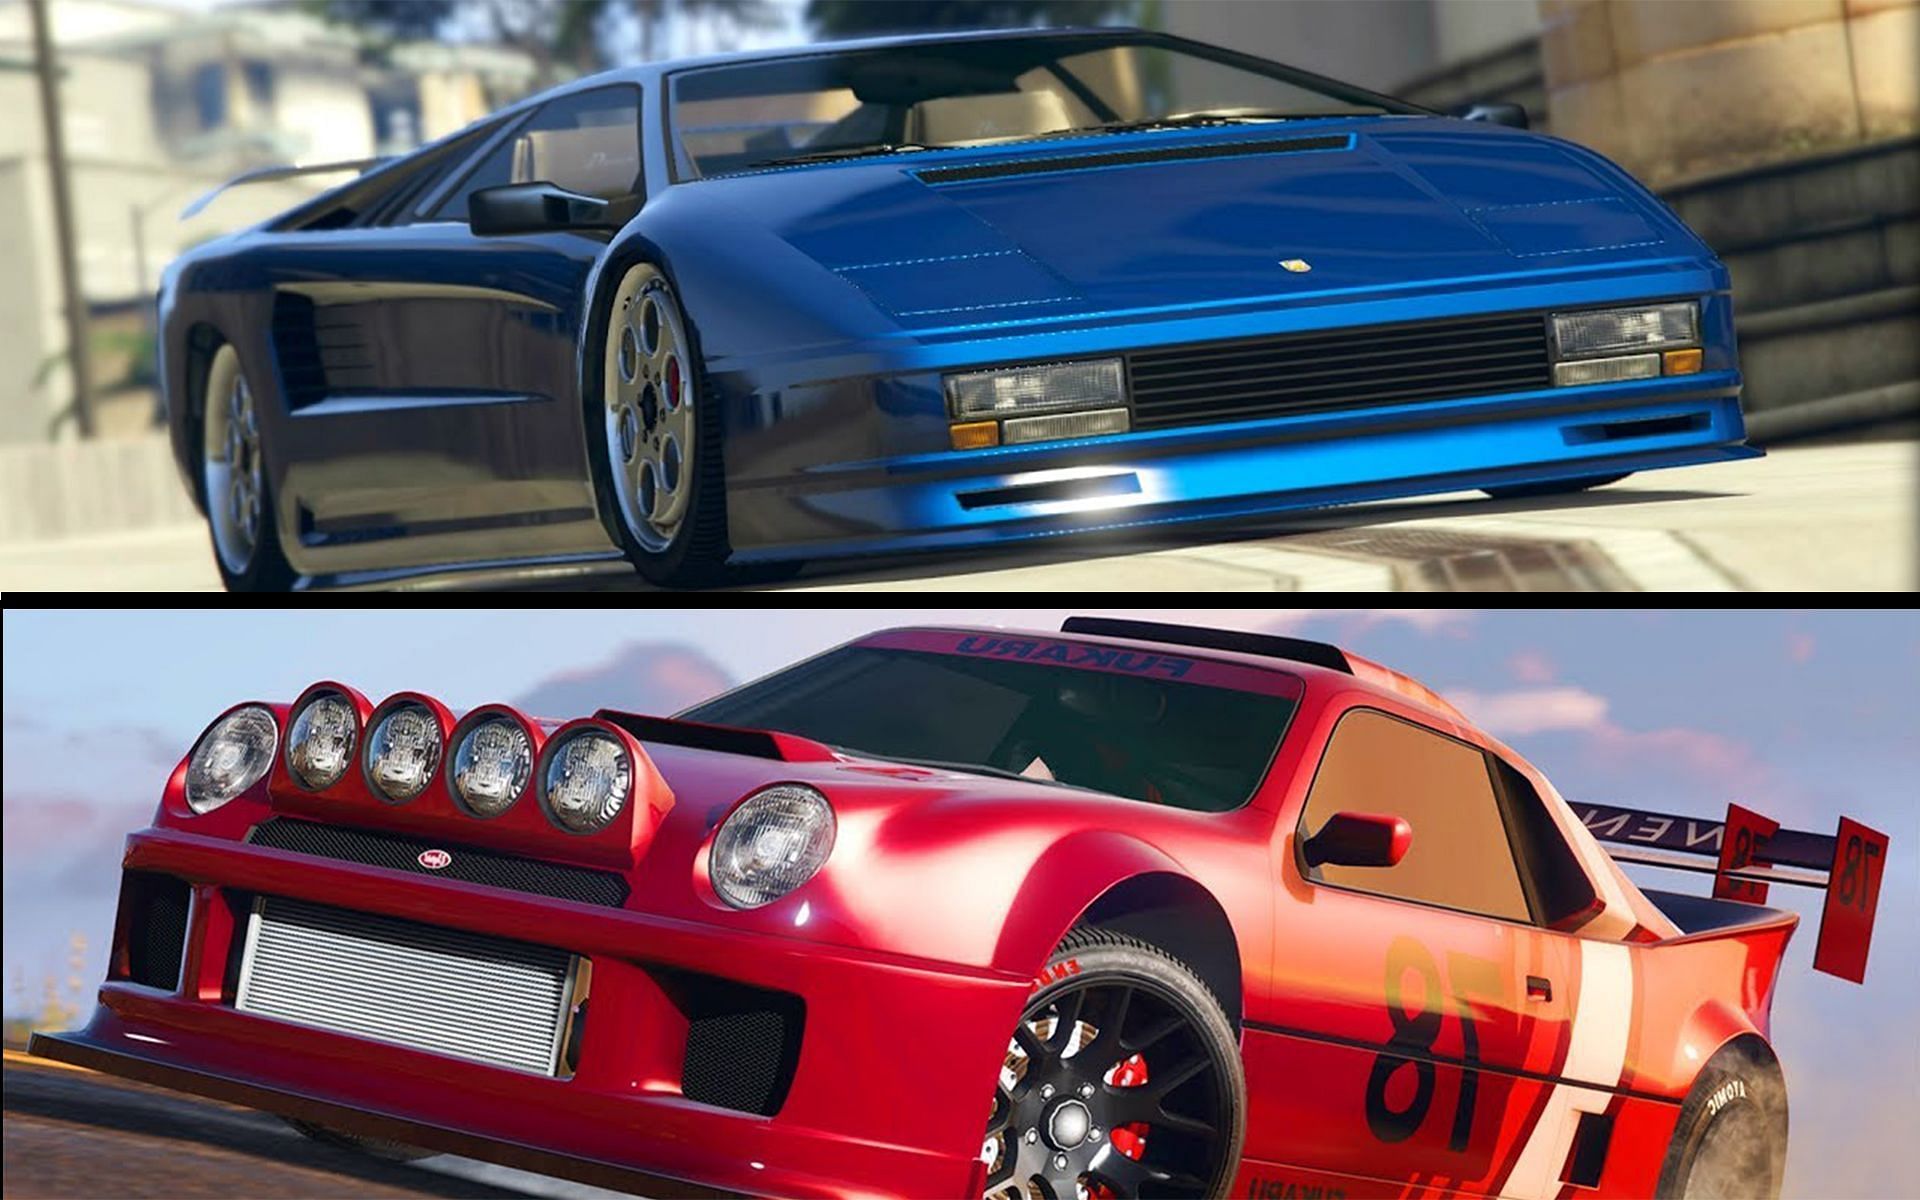 GTA Online showcases two great vehicles up for grabs this week (Image via Sportskeeda)